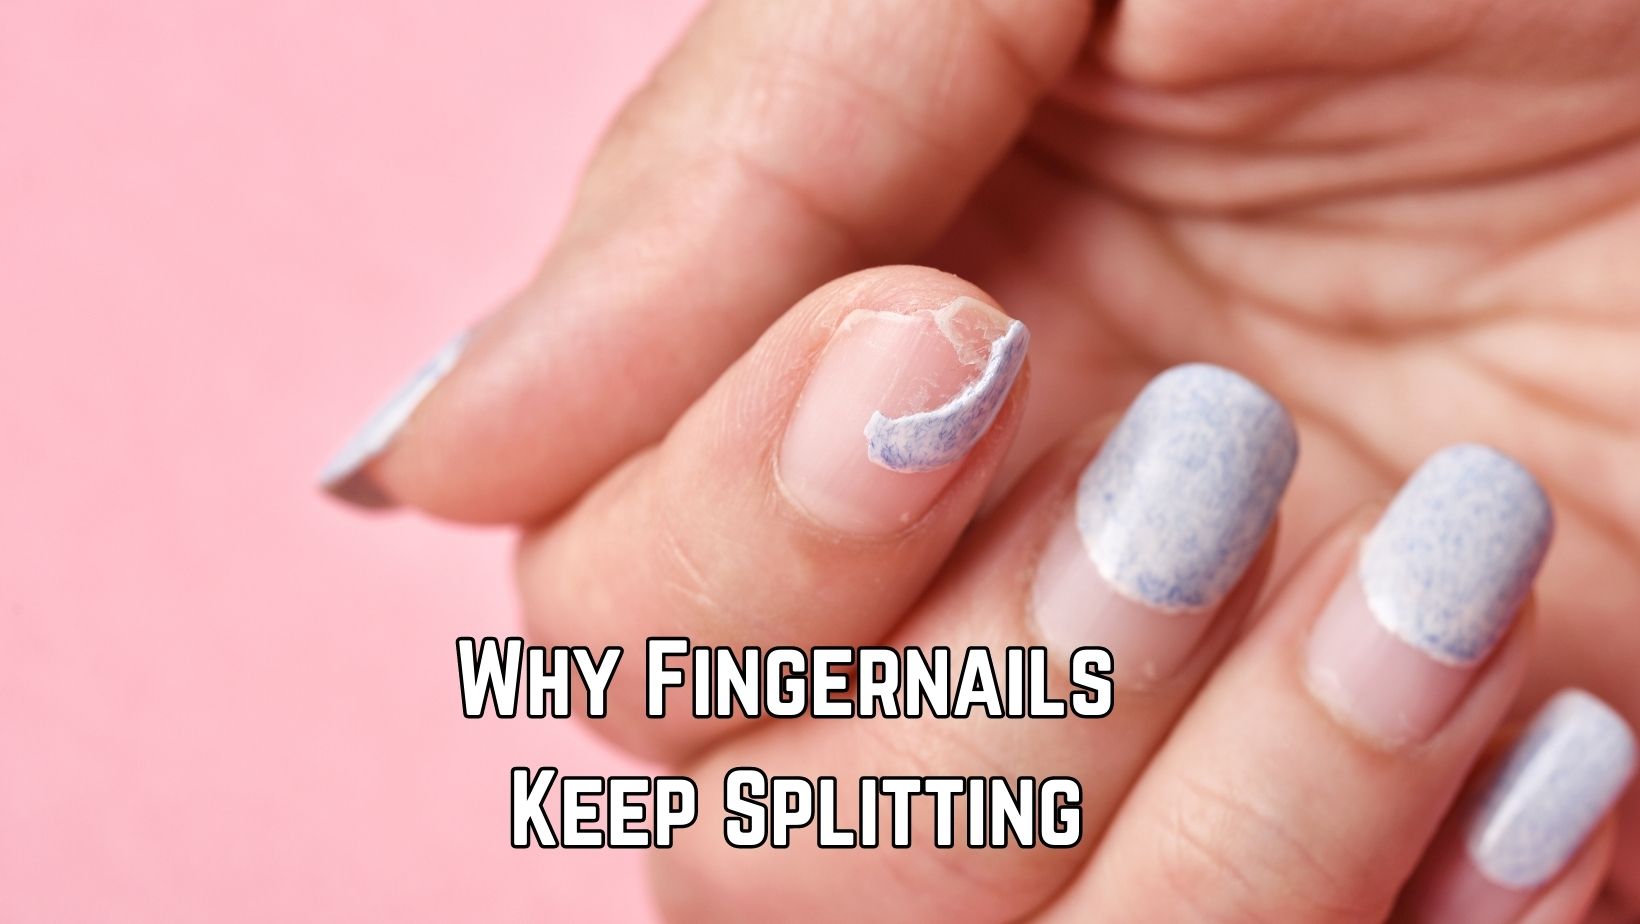 My Fingernails Keep Splitting